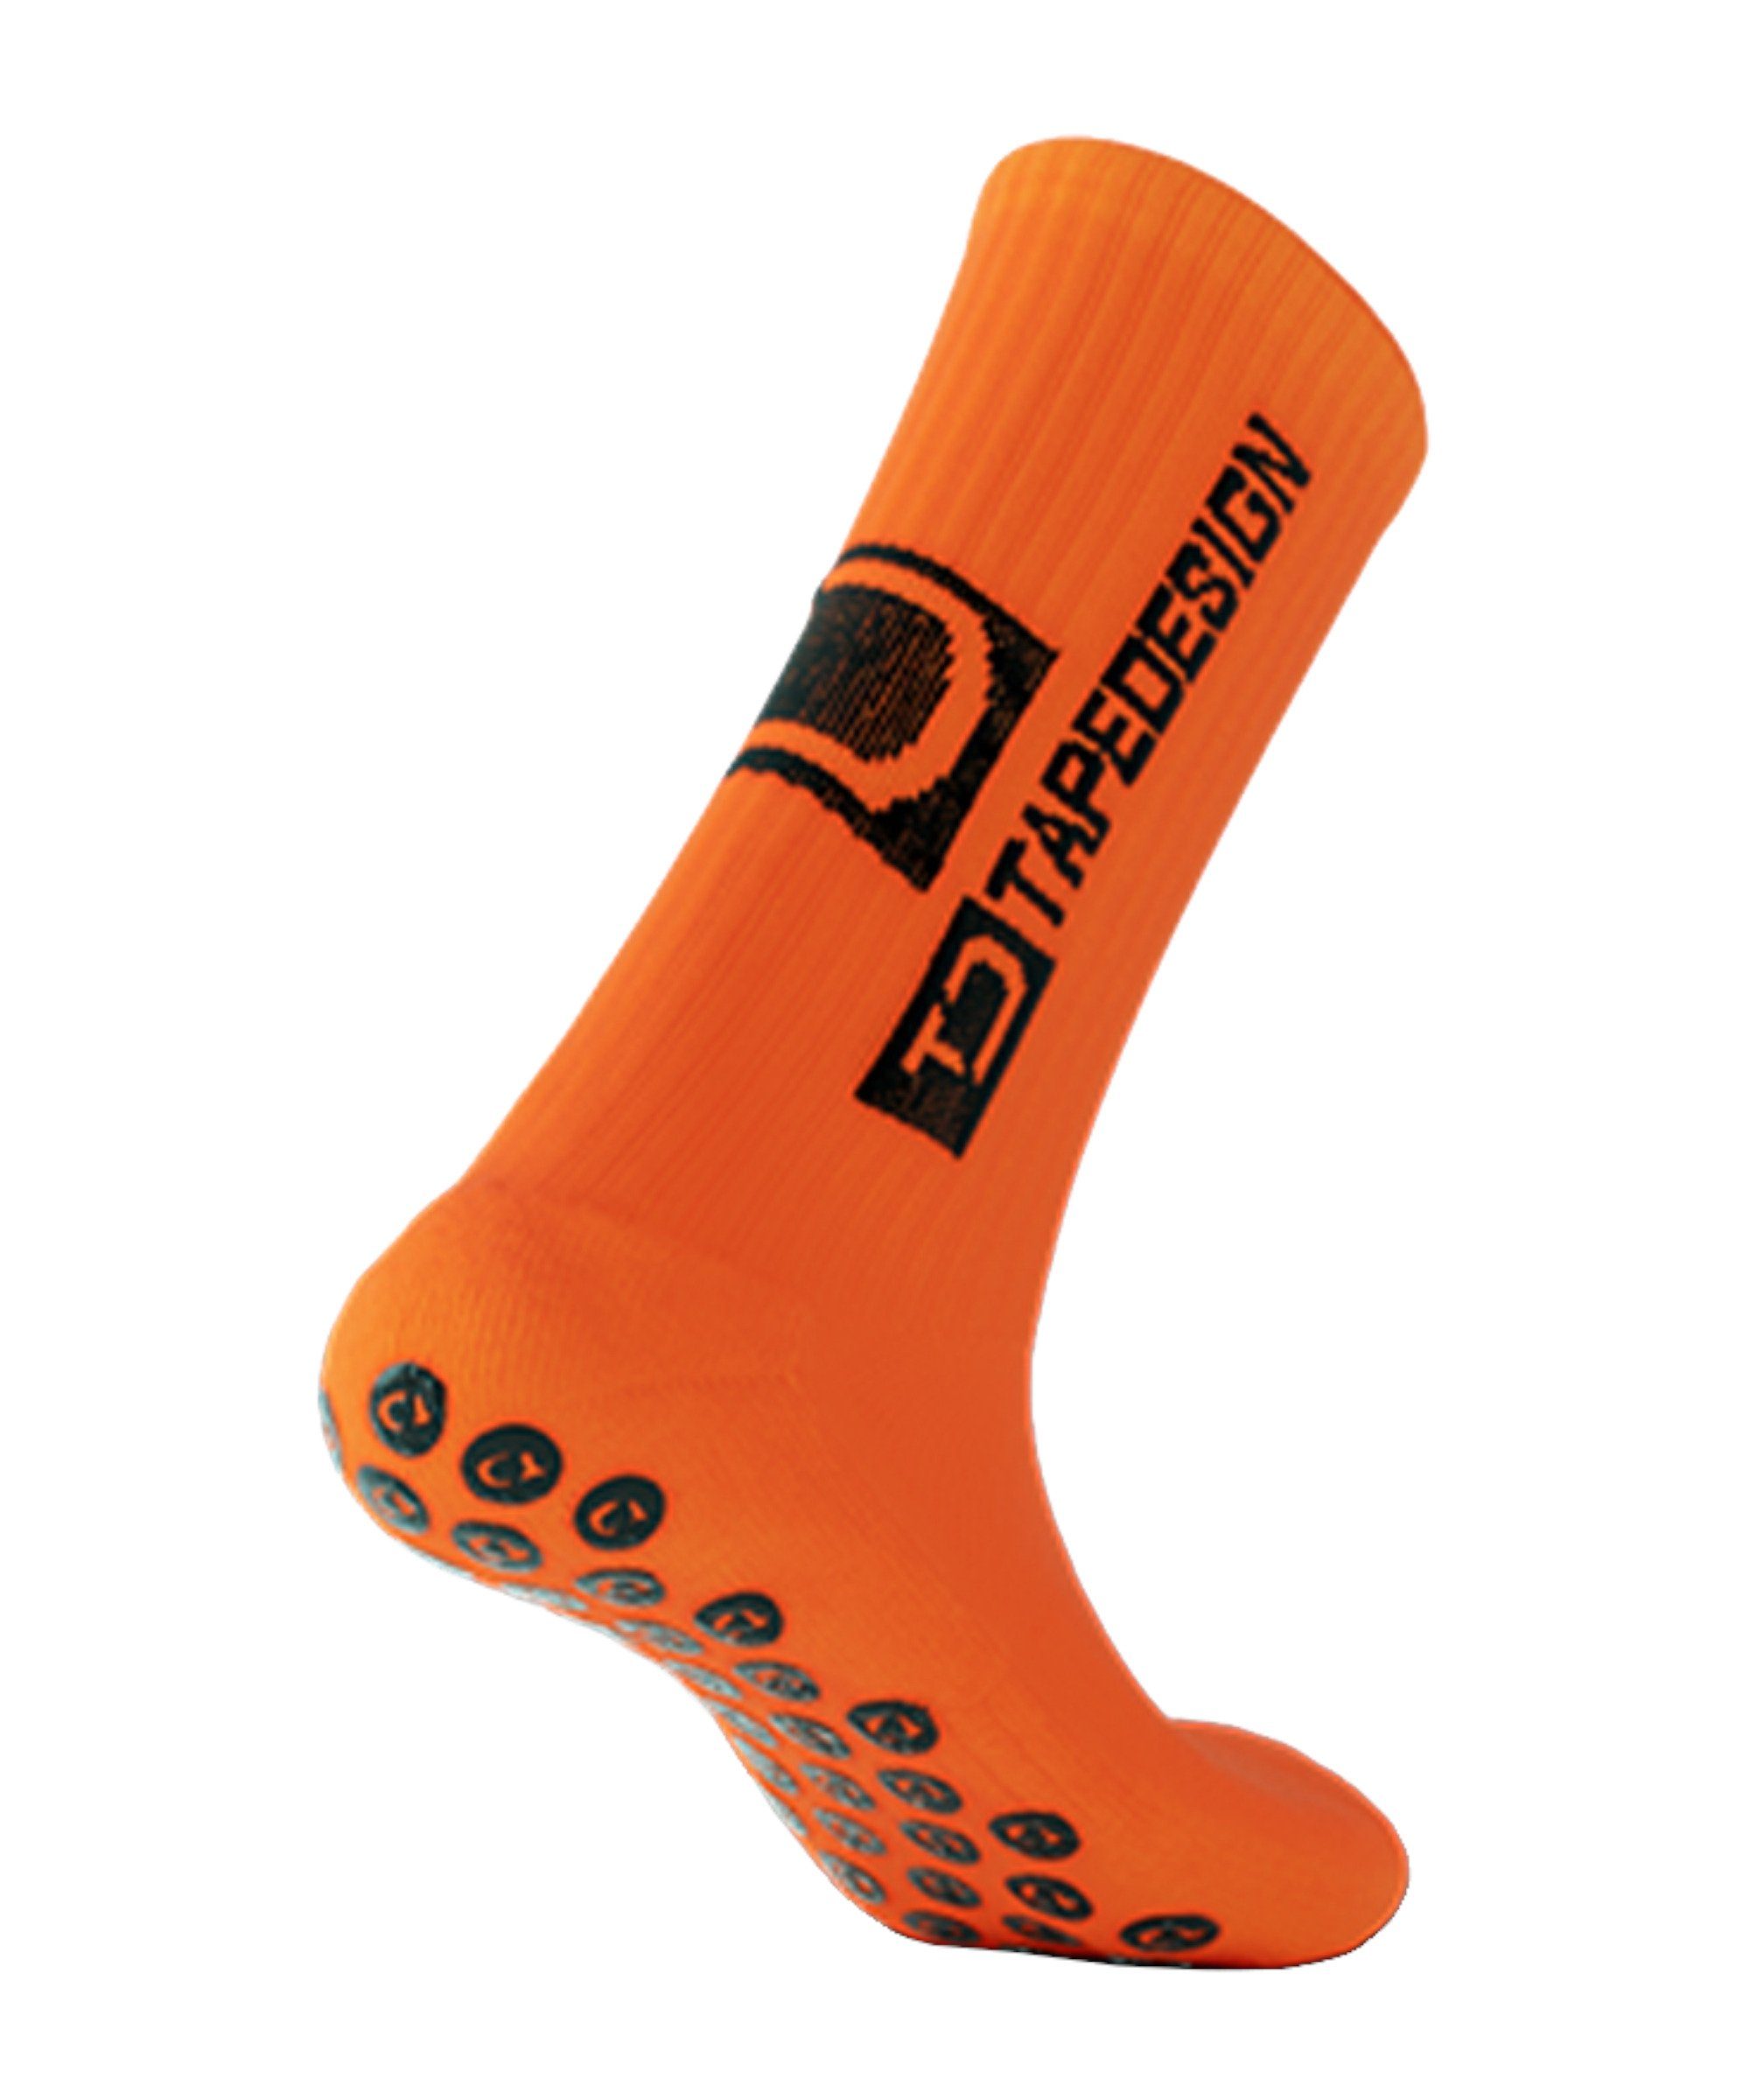 Tapedesign Sportsocken Gripsocks orangeschwarz Socken default